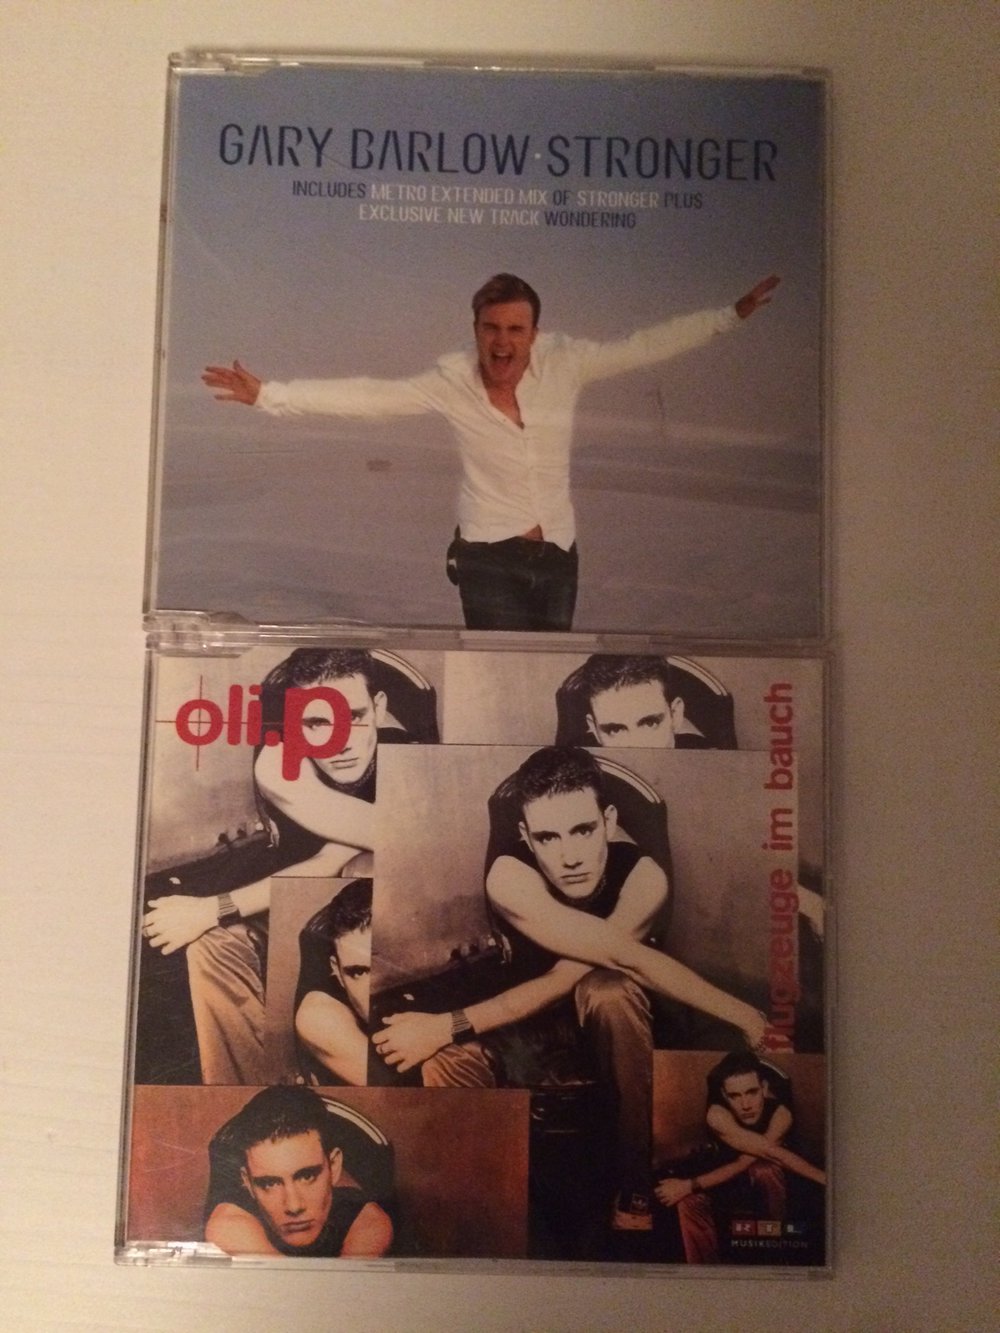 Oli P. - Flugzeuge im Bauch, Gary Barlow - Stronger Maxi CDs CD